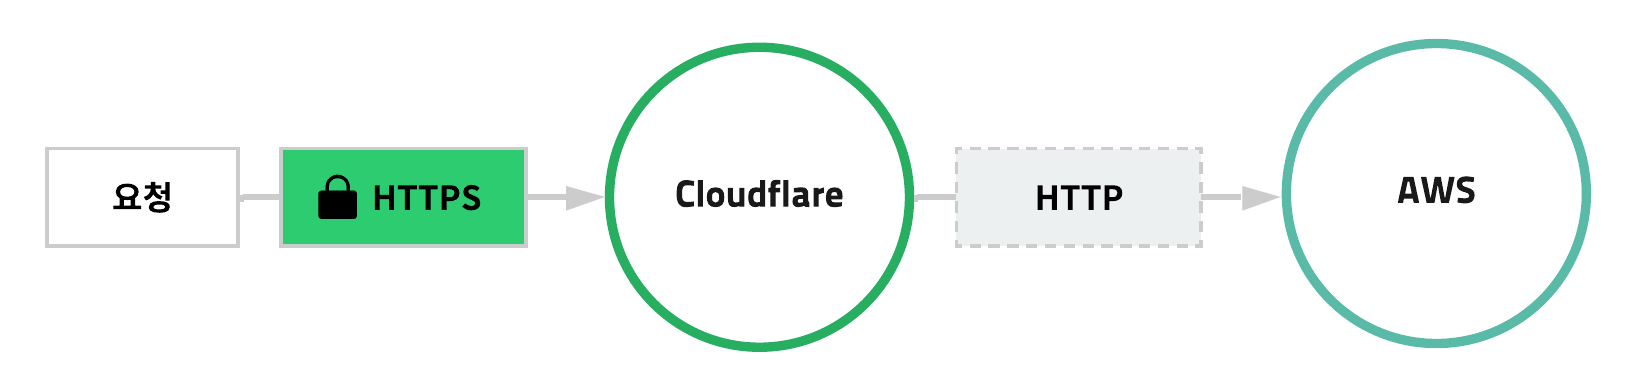 Cloudflare flexible mode